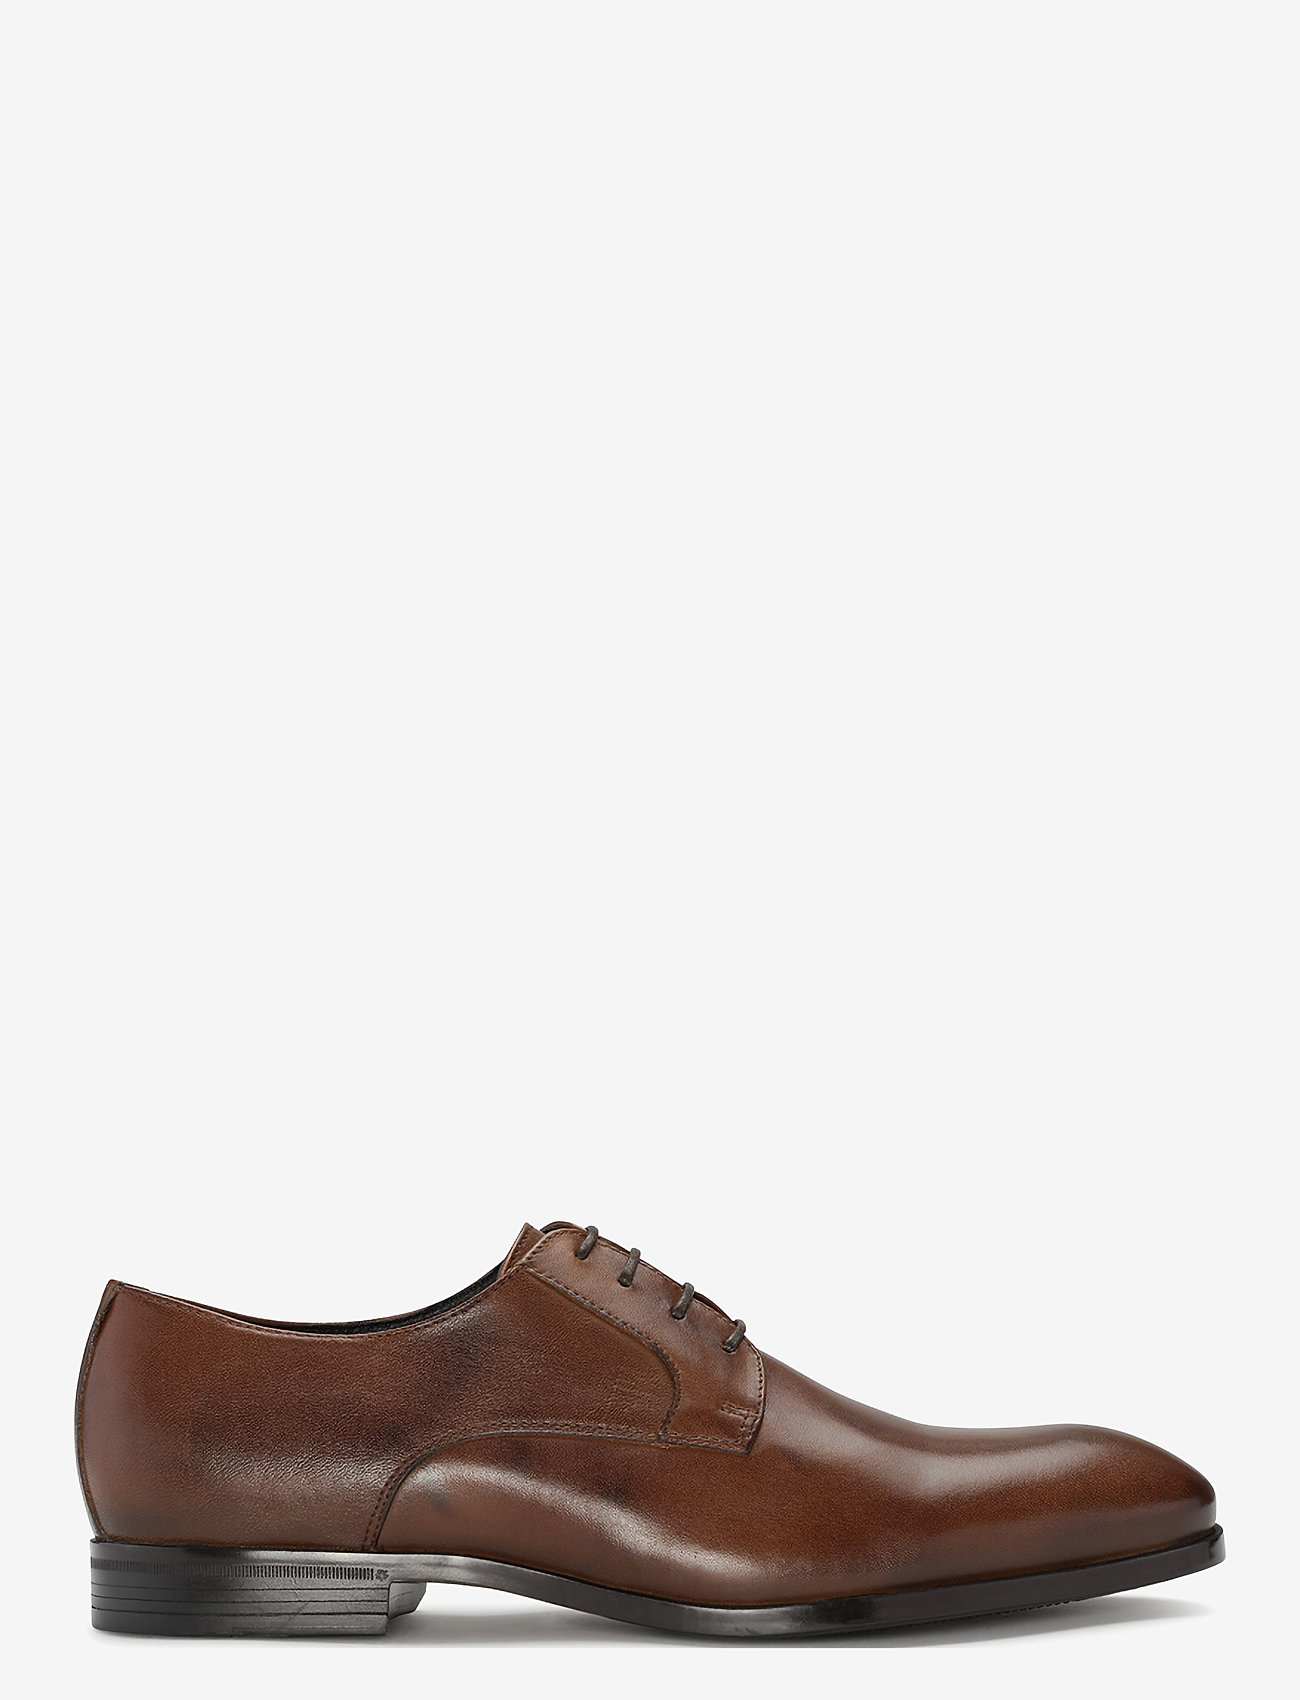 Playboy Footwear - PB10048 - schnürschuhe - cognac leather - 1